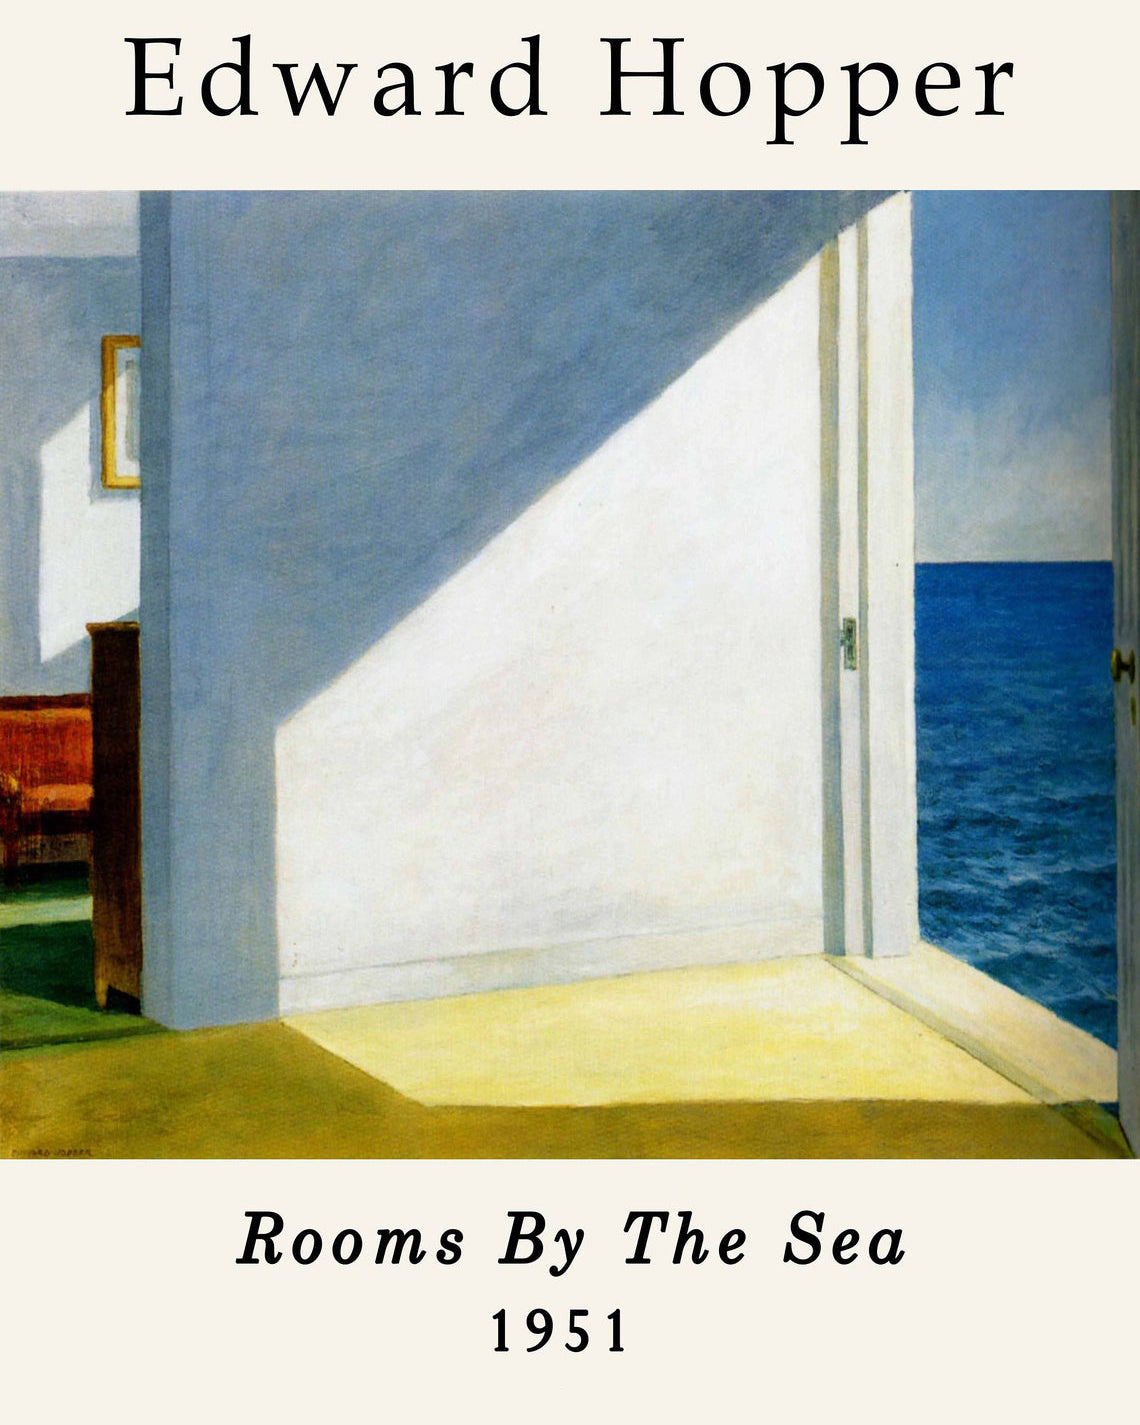 Edward Hopper Exhibition Poster